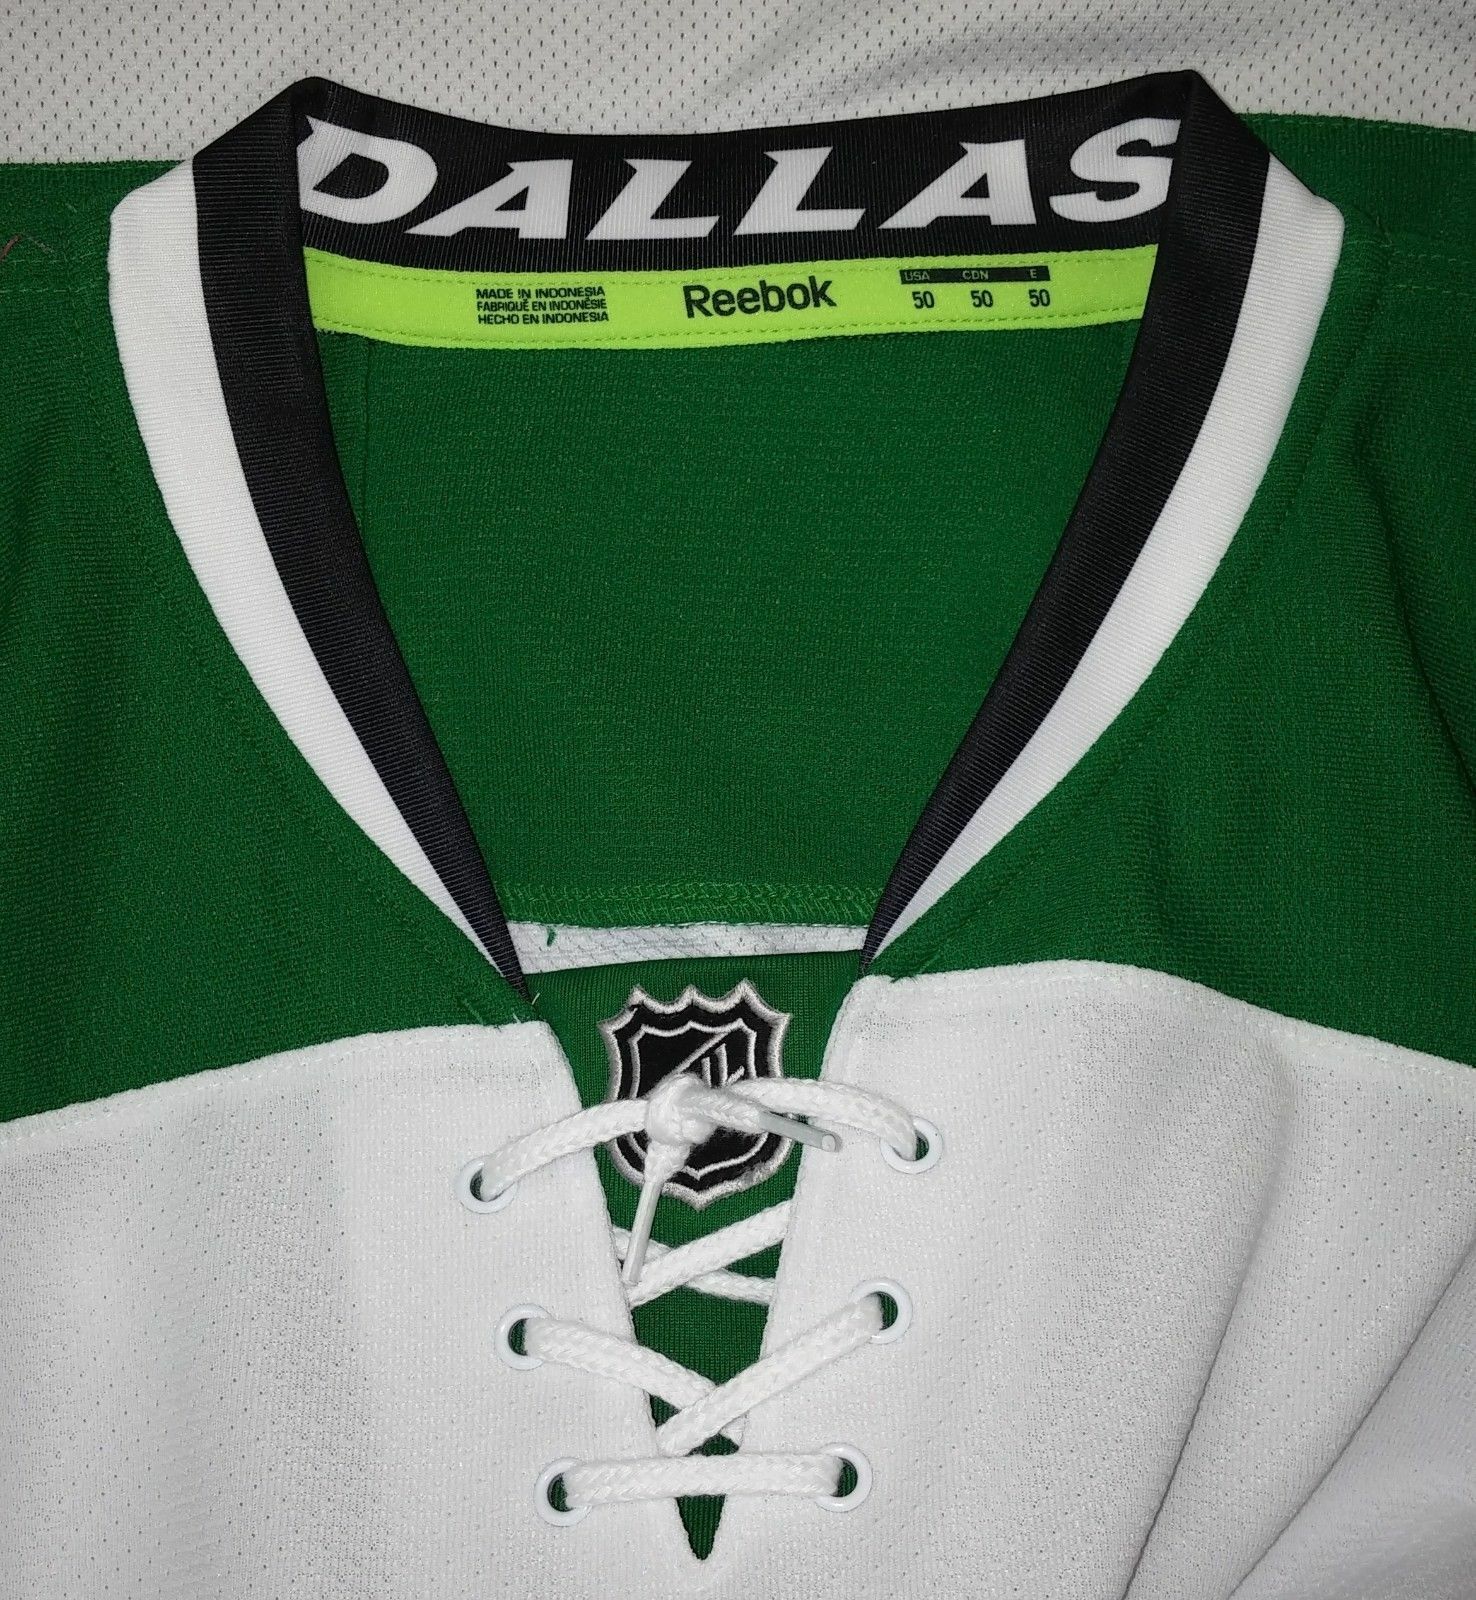 DALLAS STARS reebok NHL authentic EDGE 1.0 hockey jersey away-white size 50 NEW Image 3